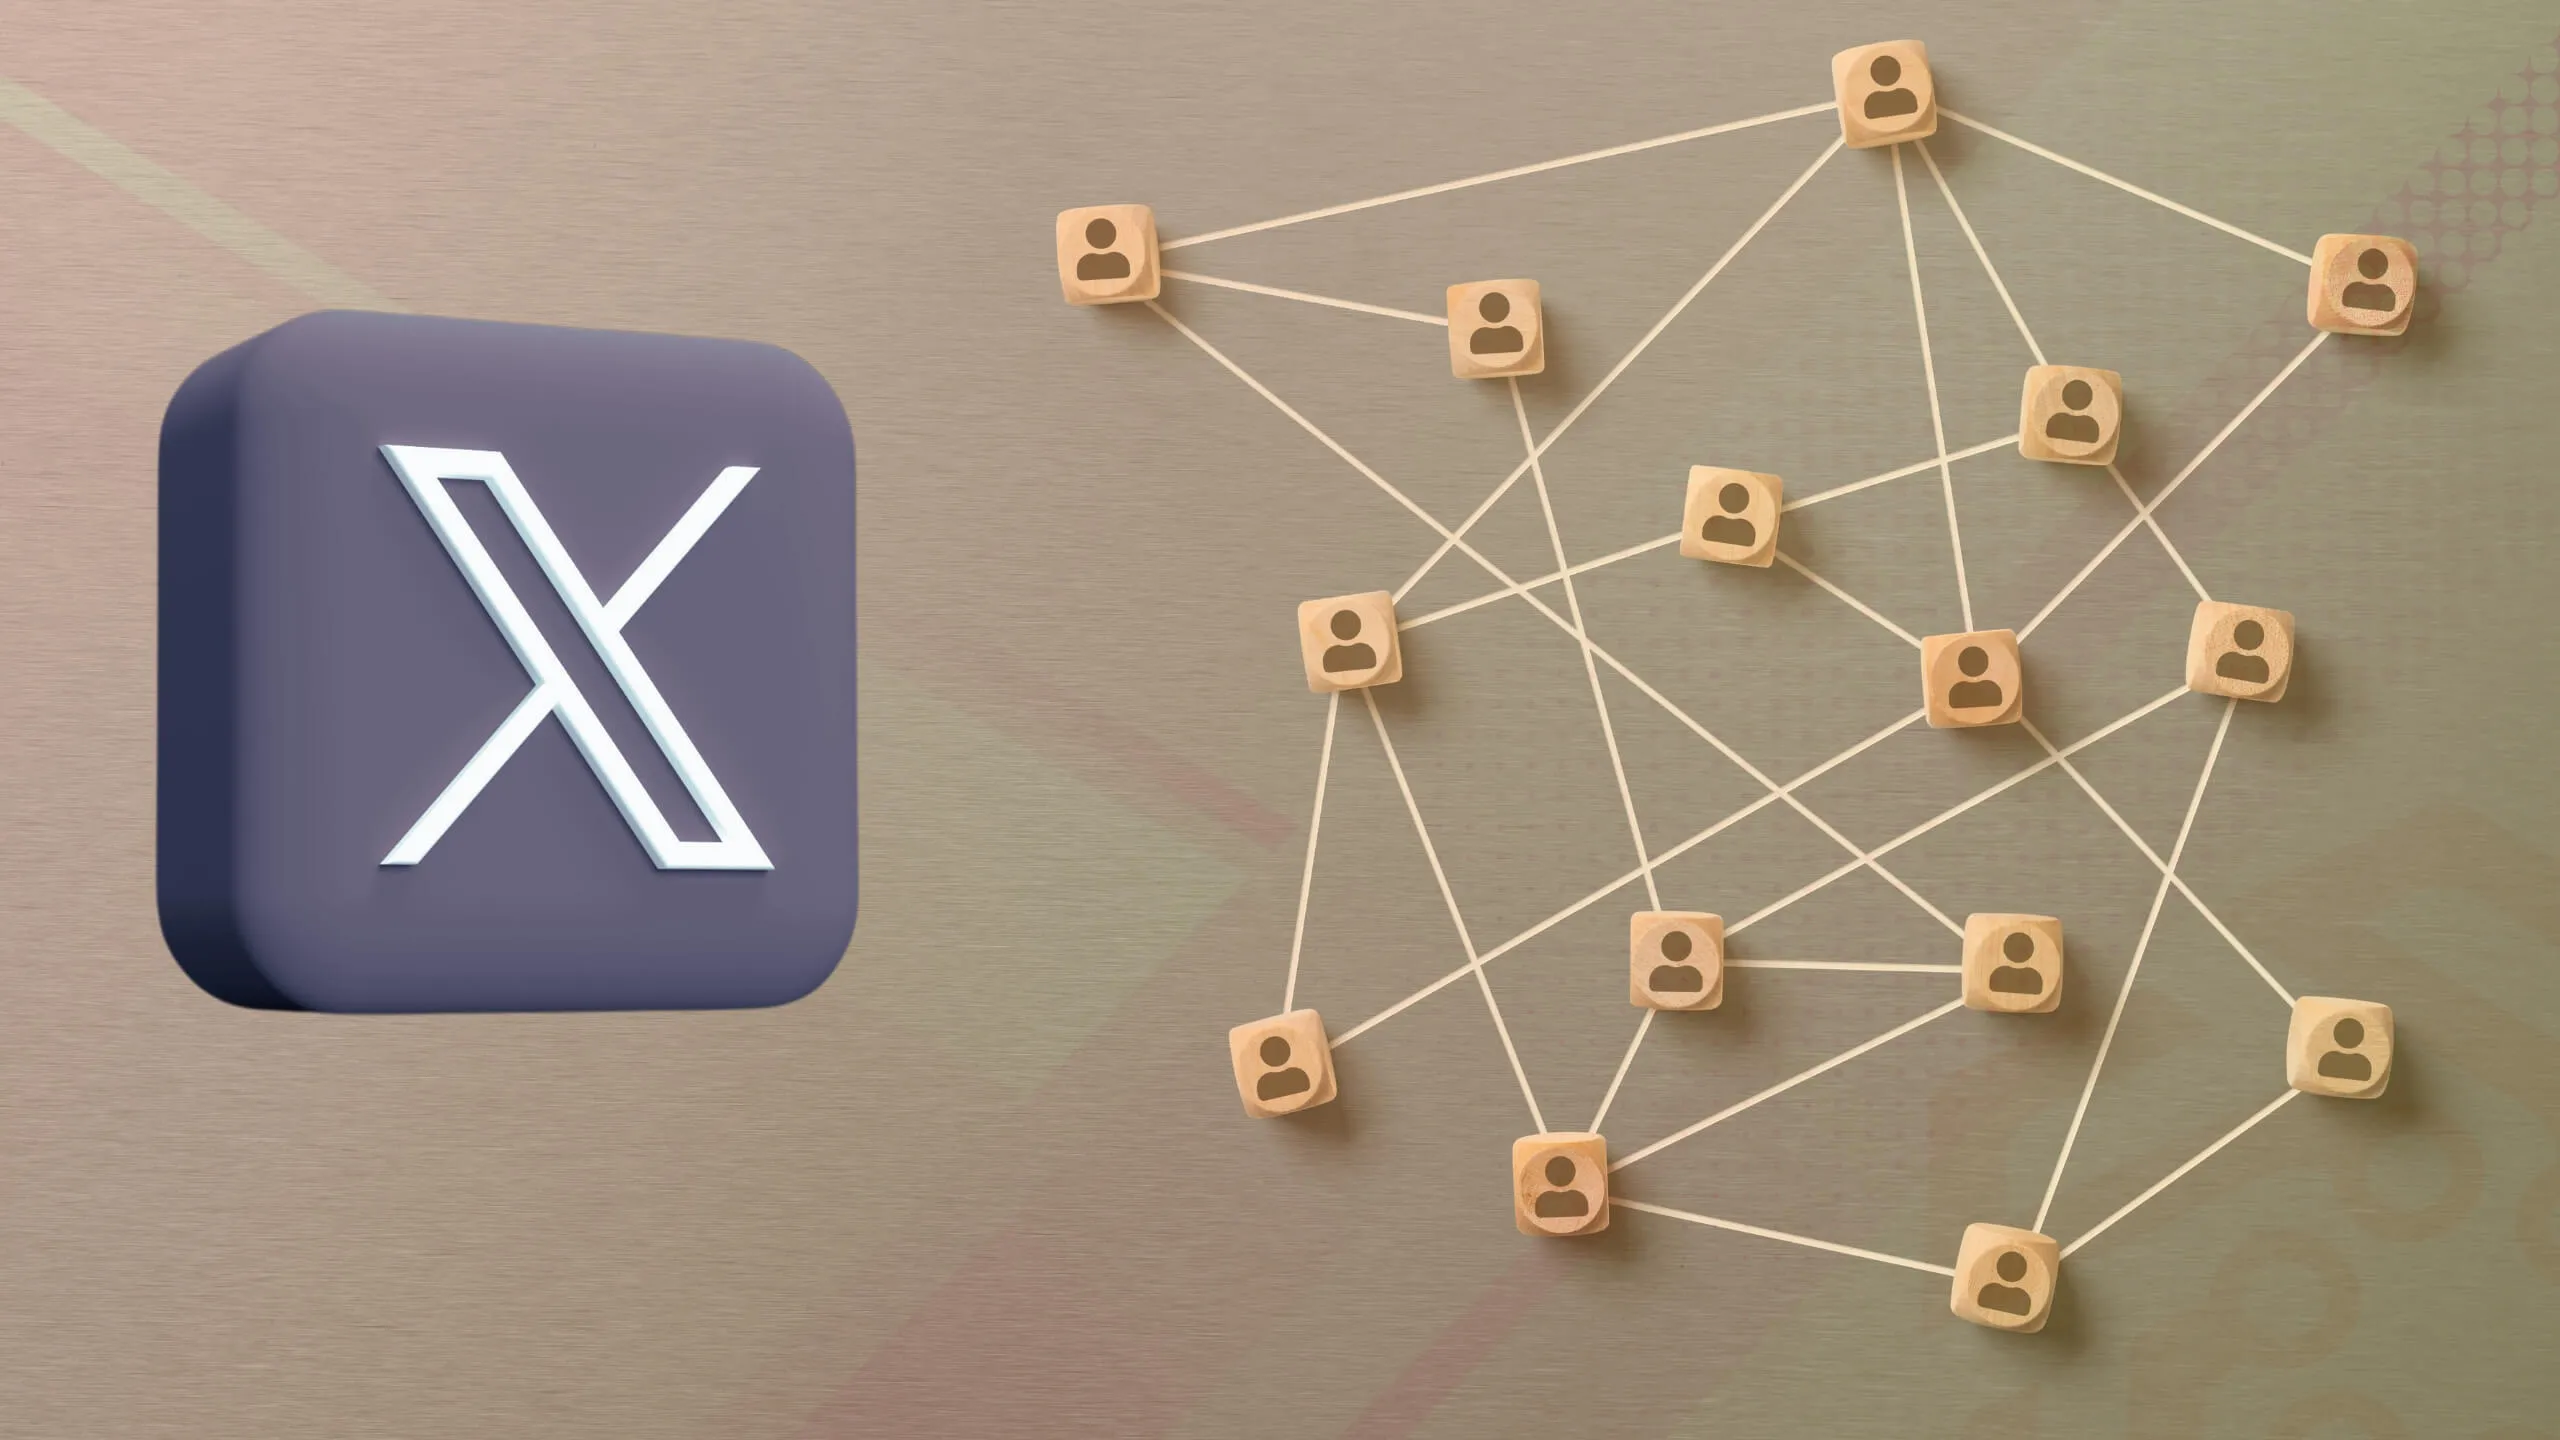 X logo against social network visualization